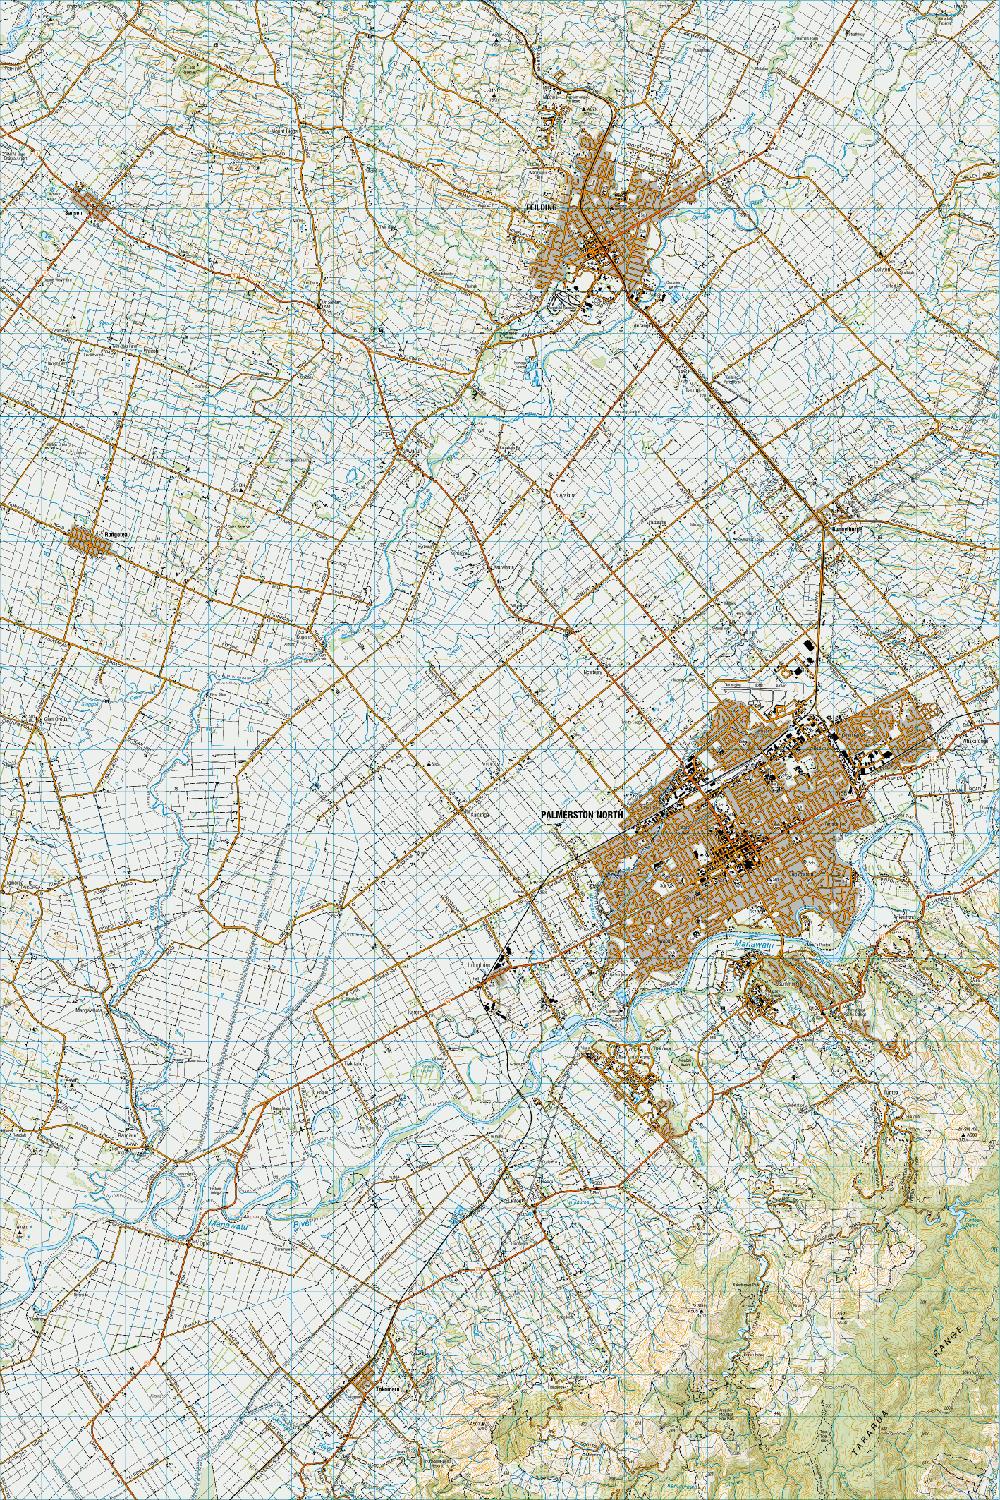 Topo map of Palmerston North